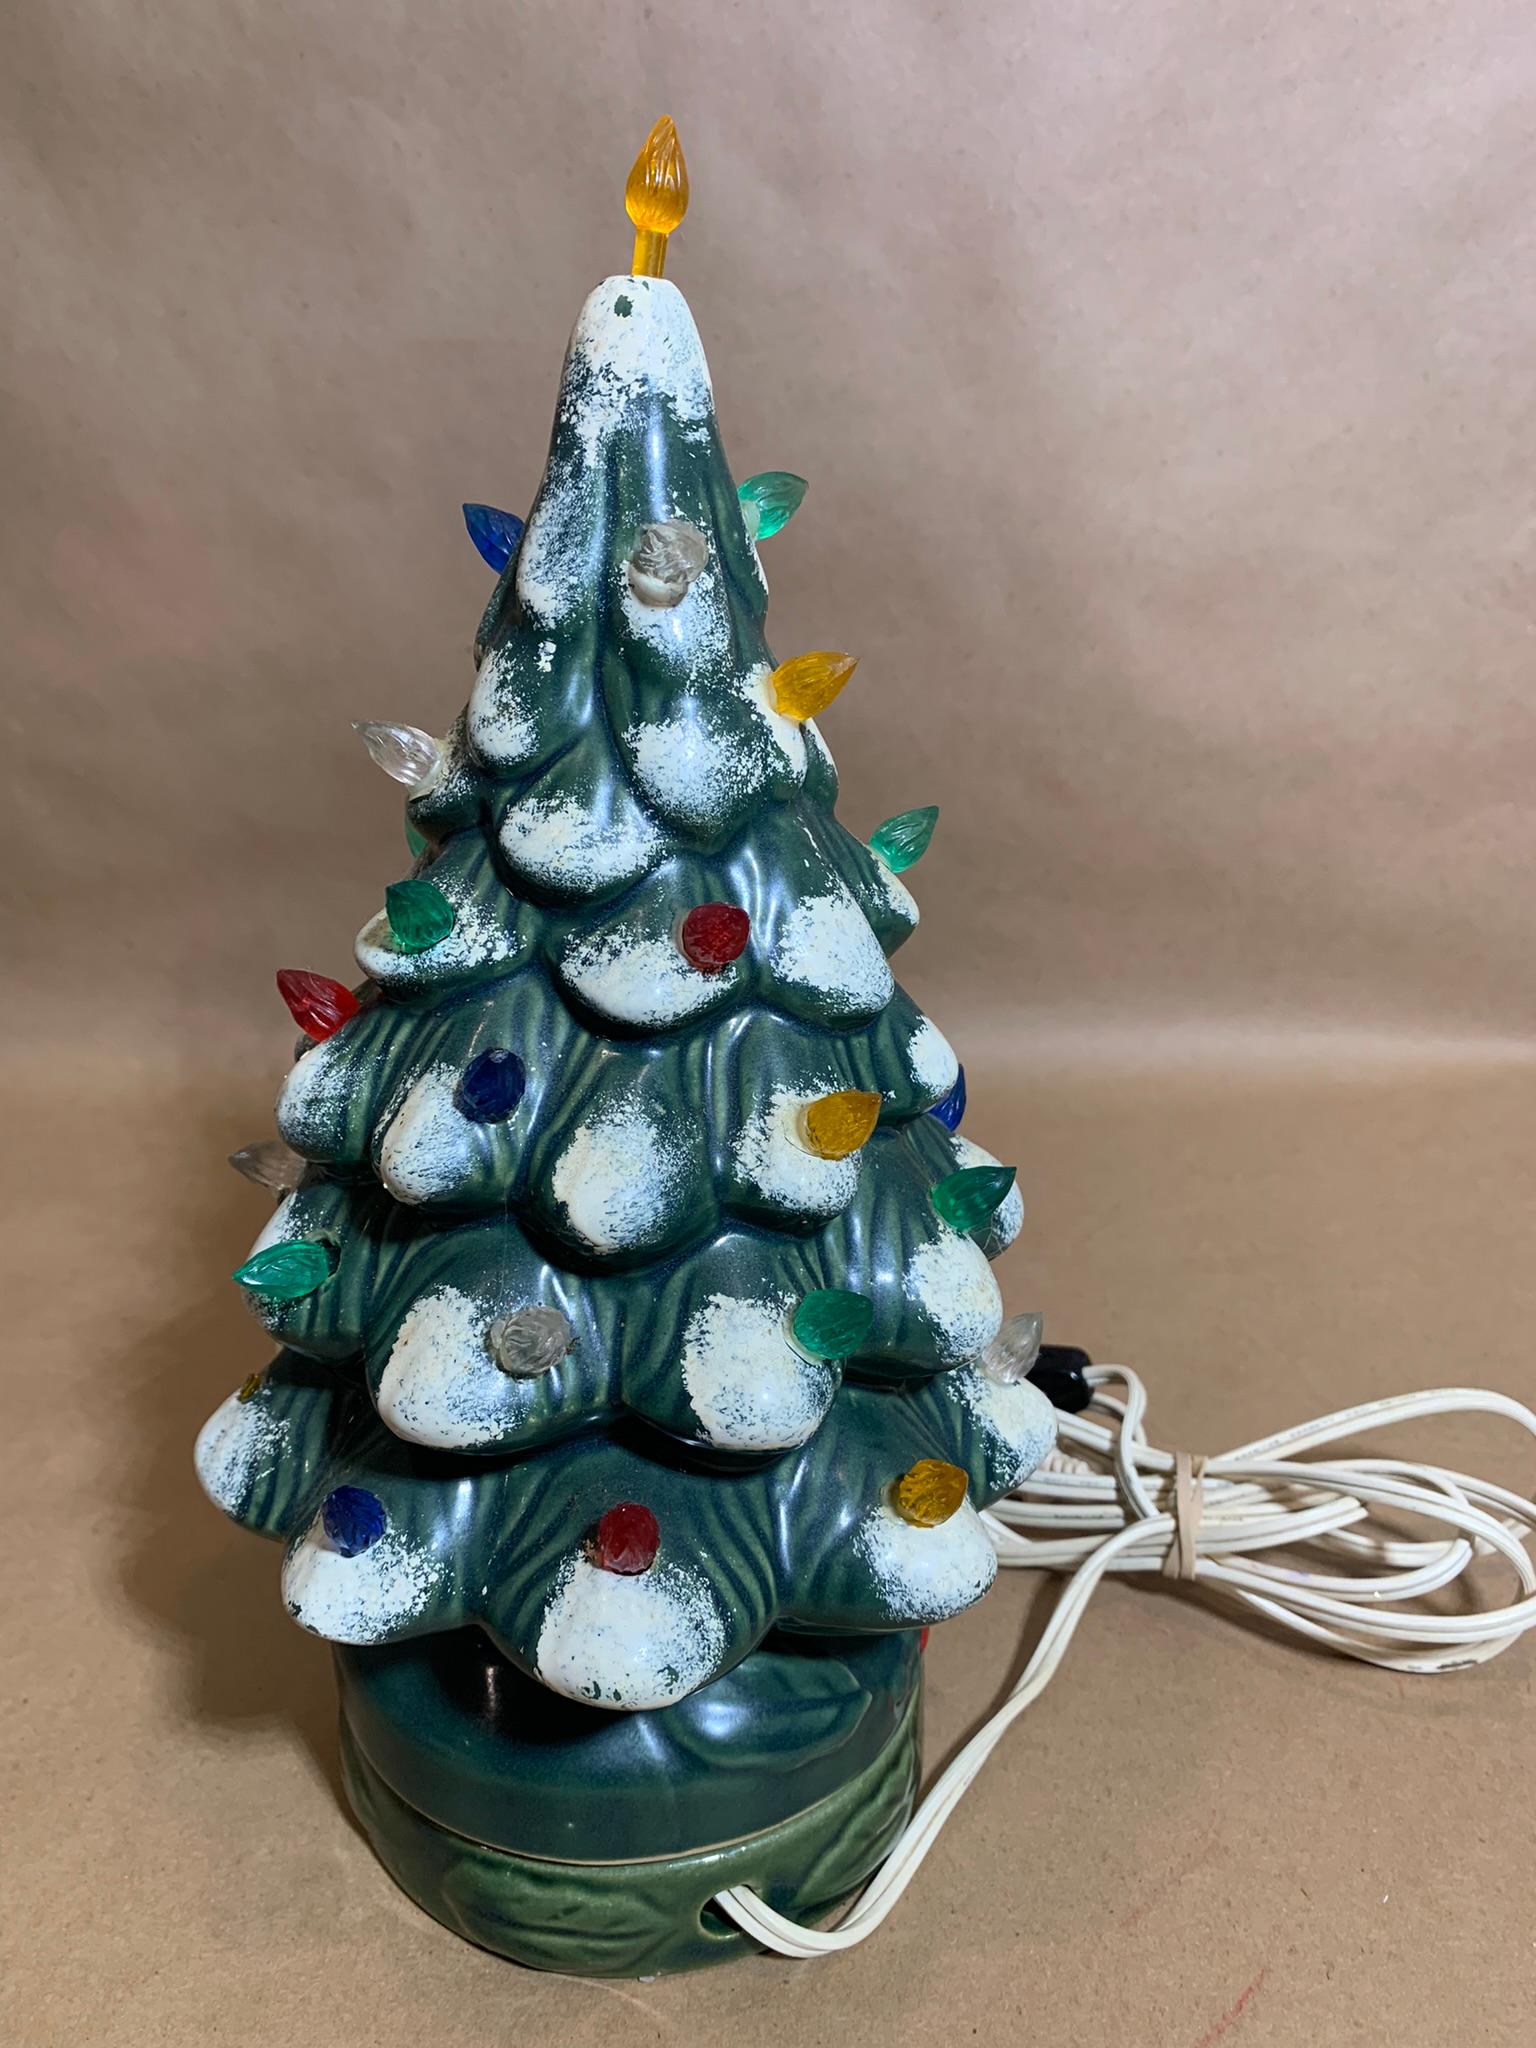 Vintage Ceramic Light Up Christmas Tree